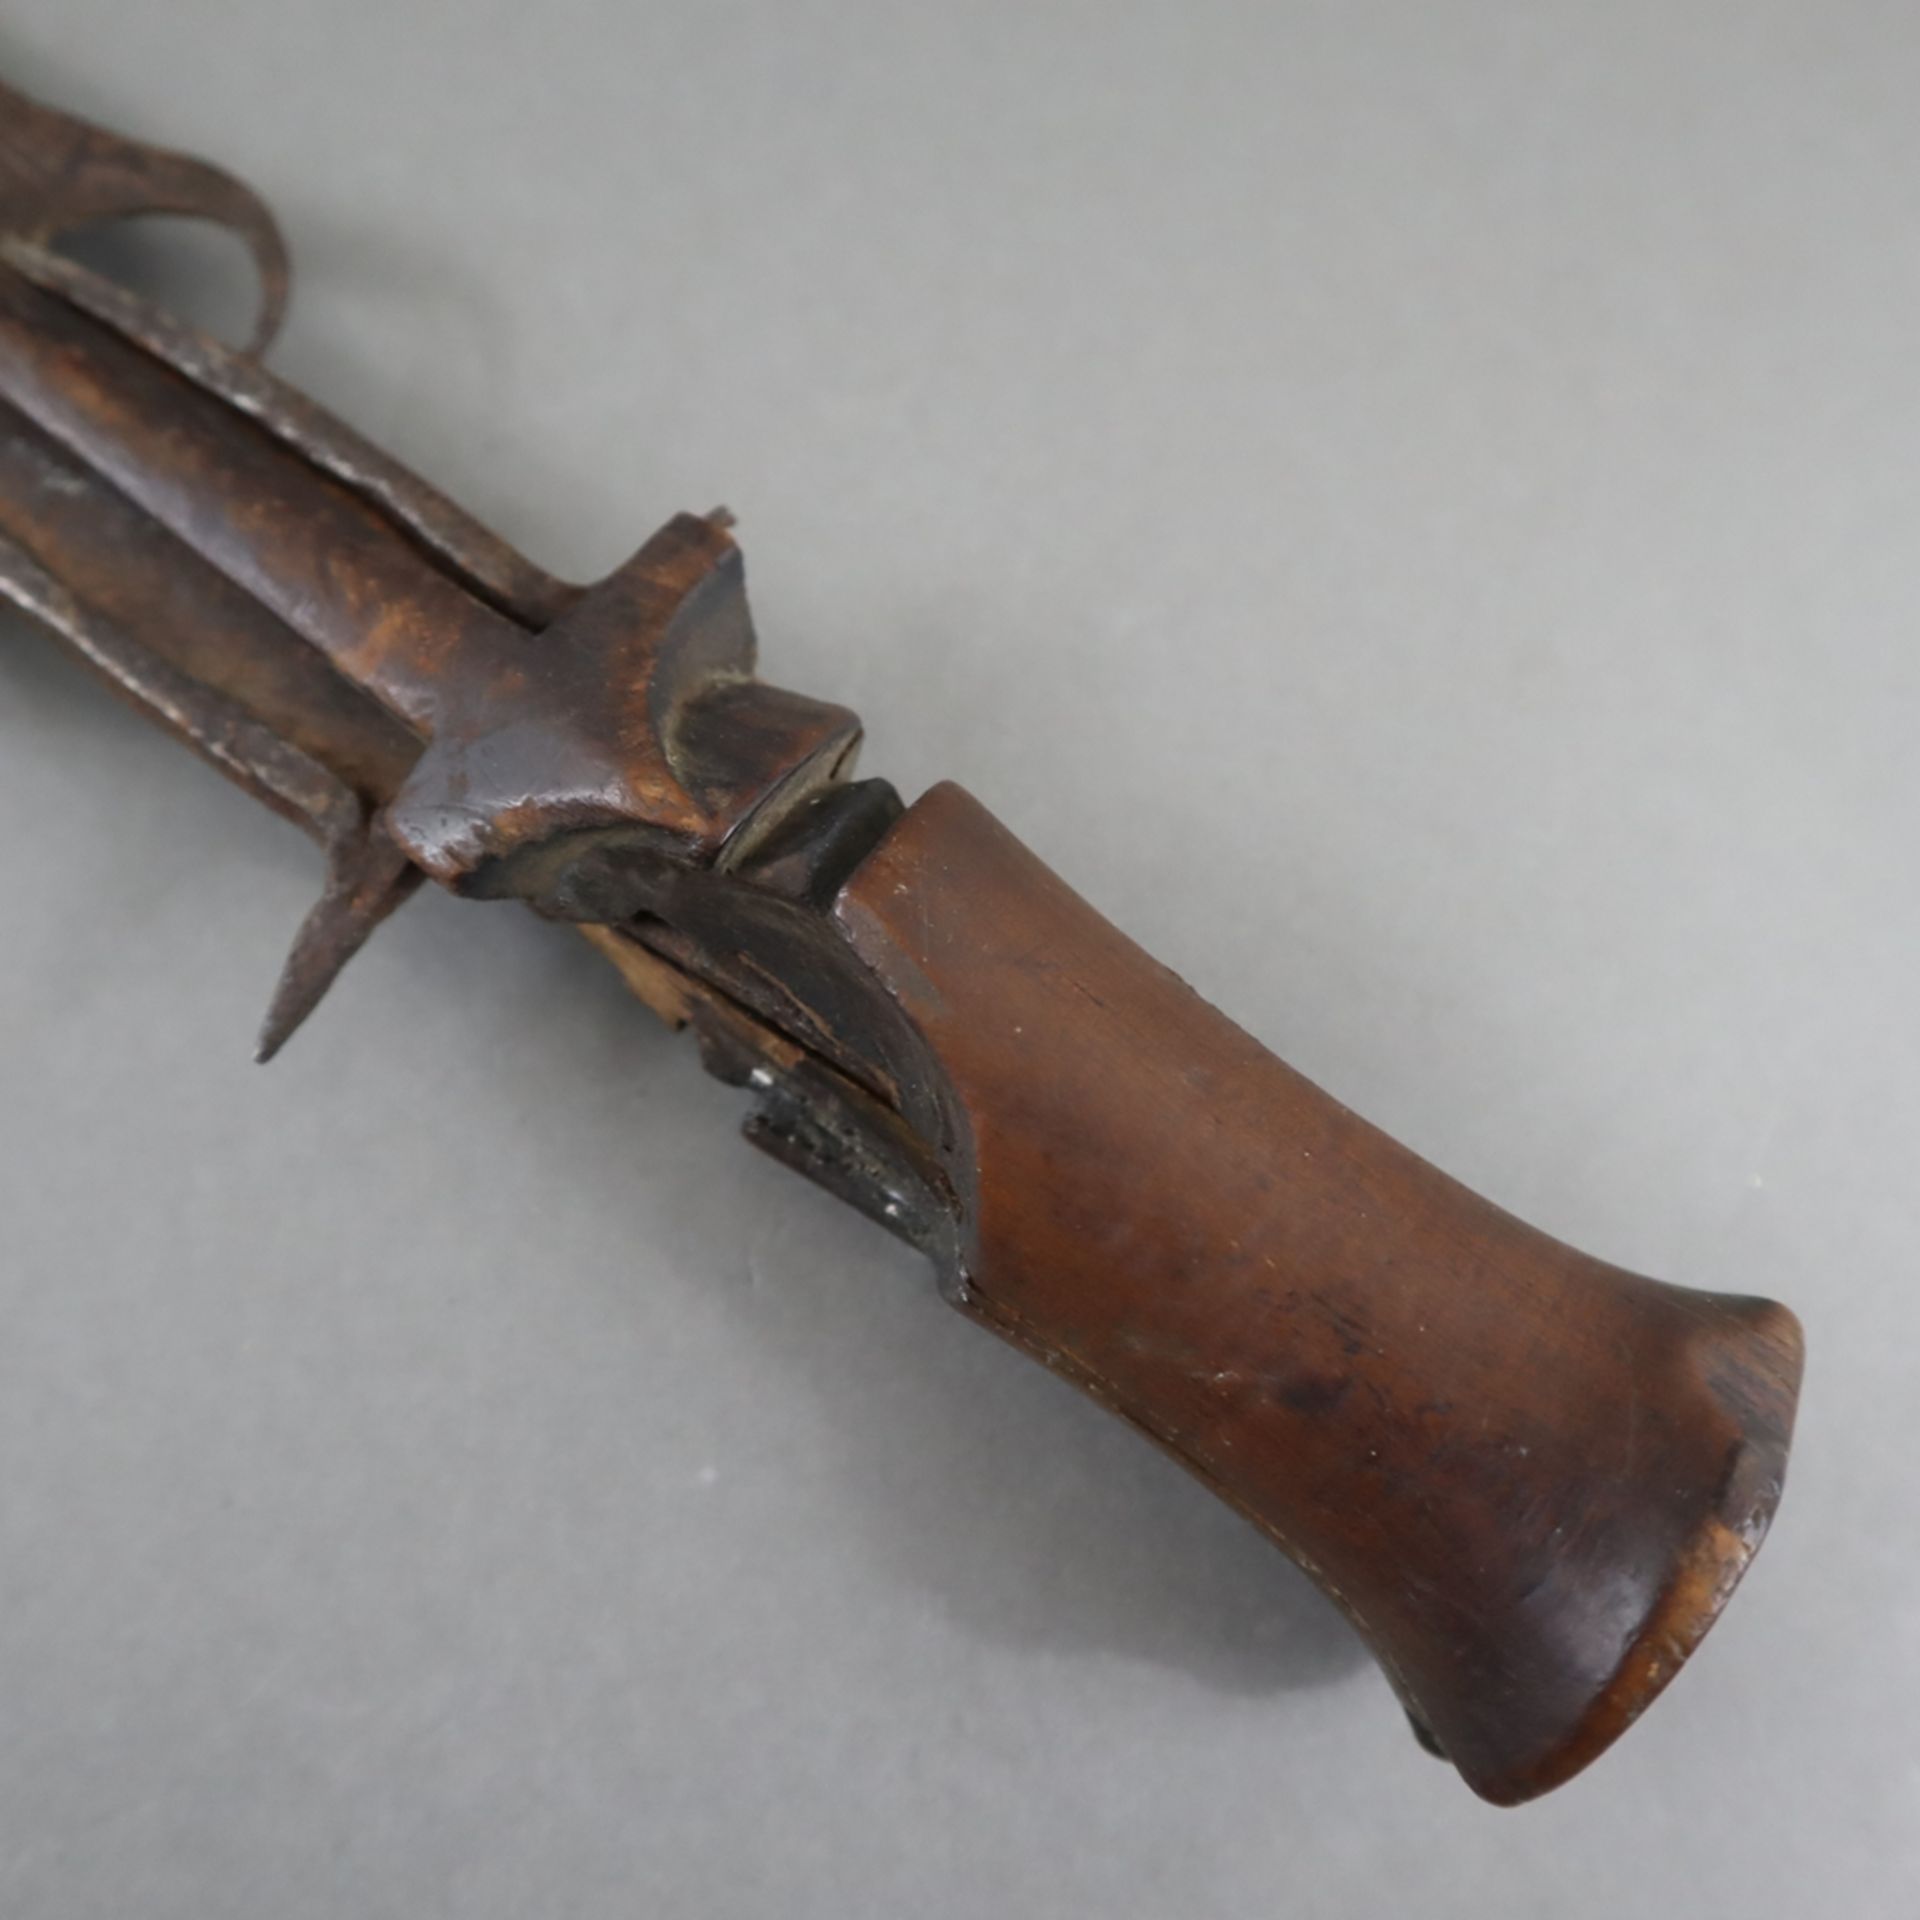 Kurzschwert "ntsakh" - Zentralafrika, Fang, blattförmige, gegradete Klinge, am Ansatz spitze, haken - Image 2 of 7